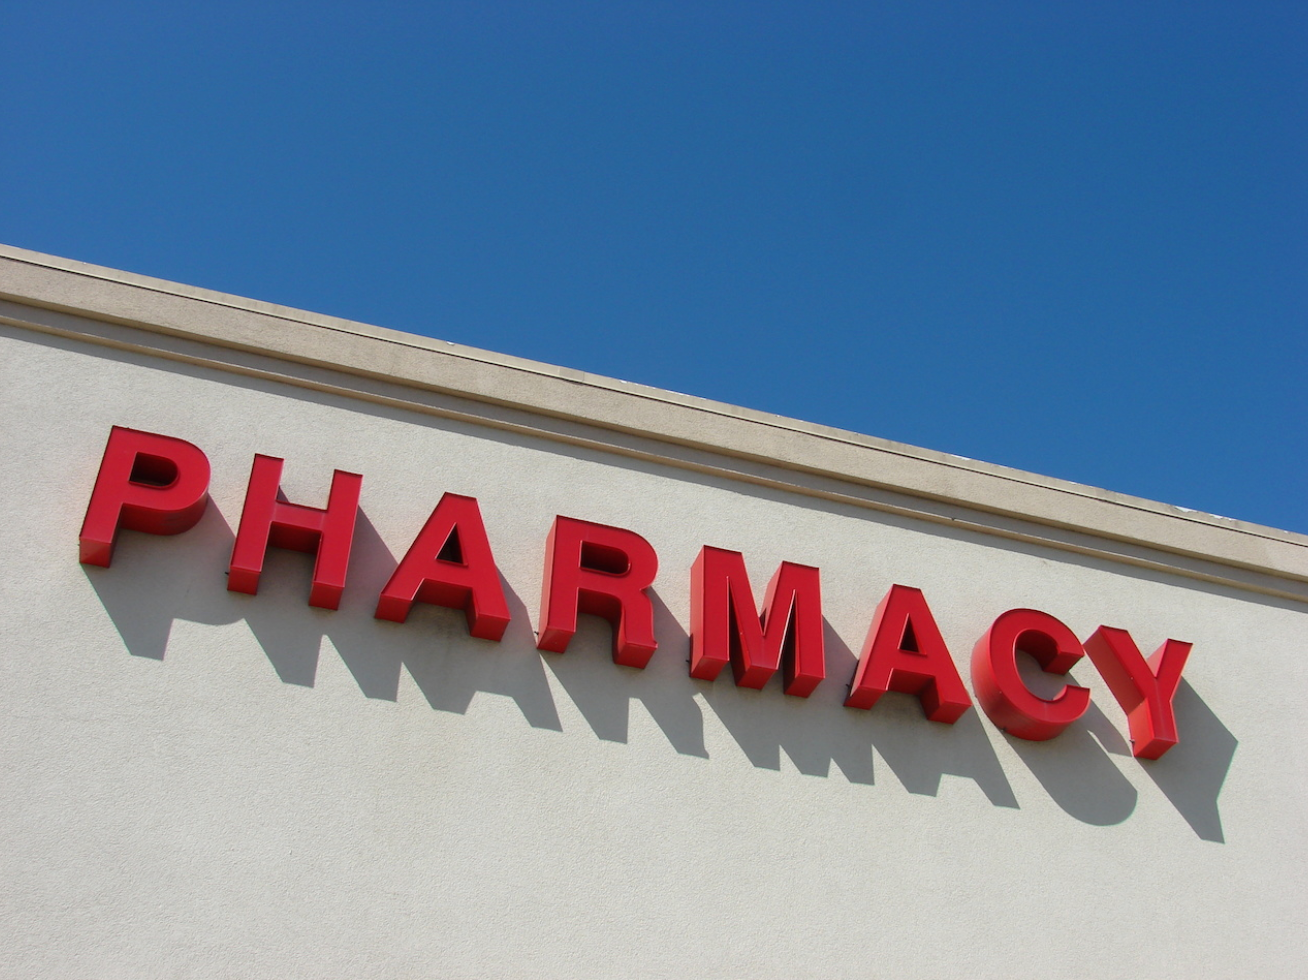 Pharmacy Quality Alliance Names New CEO